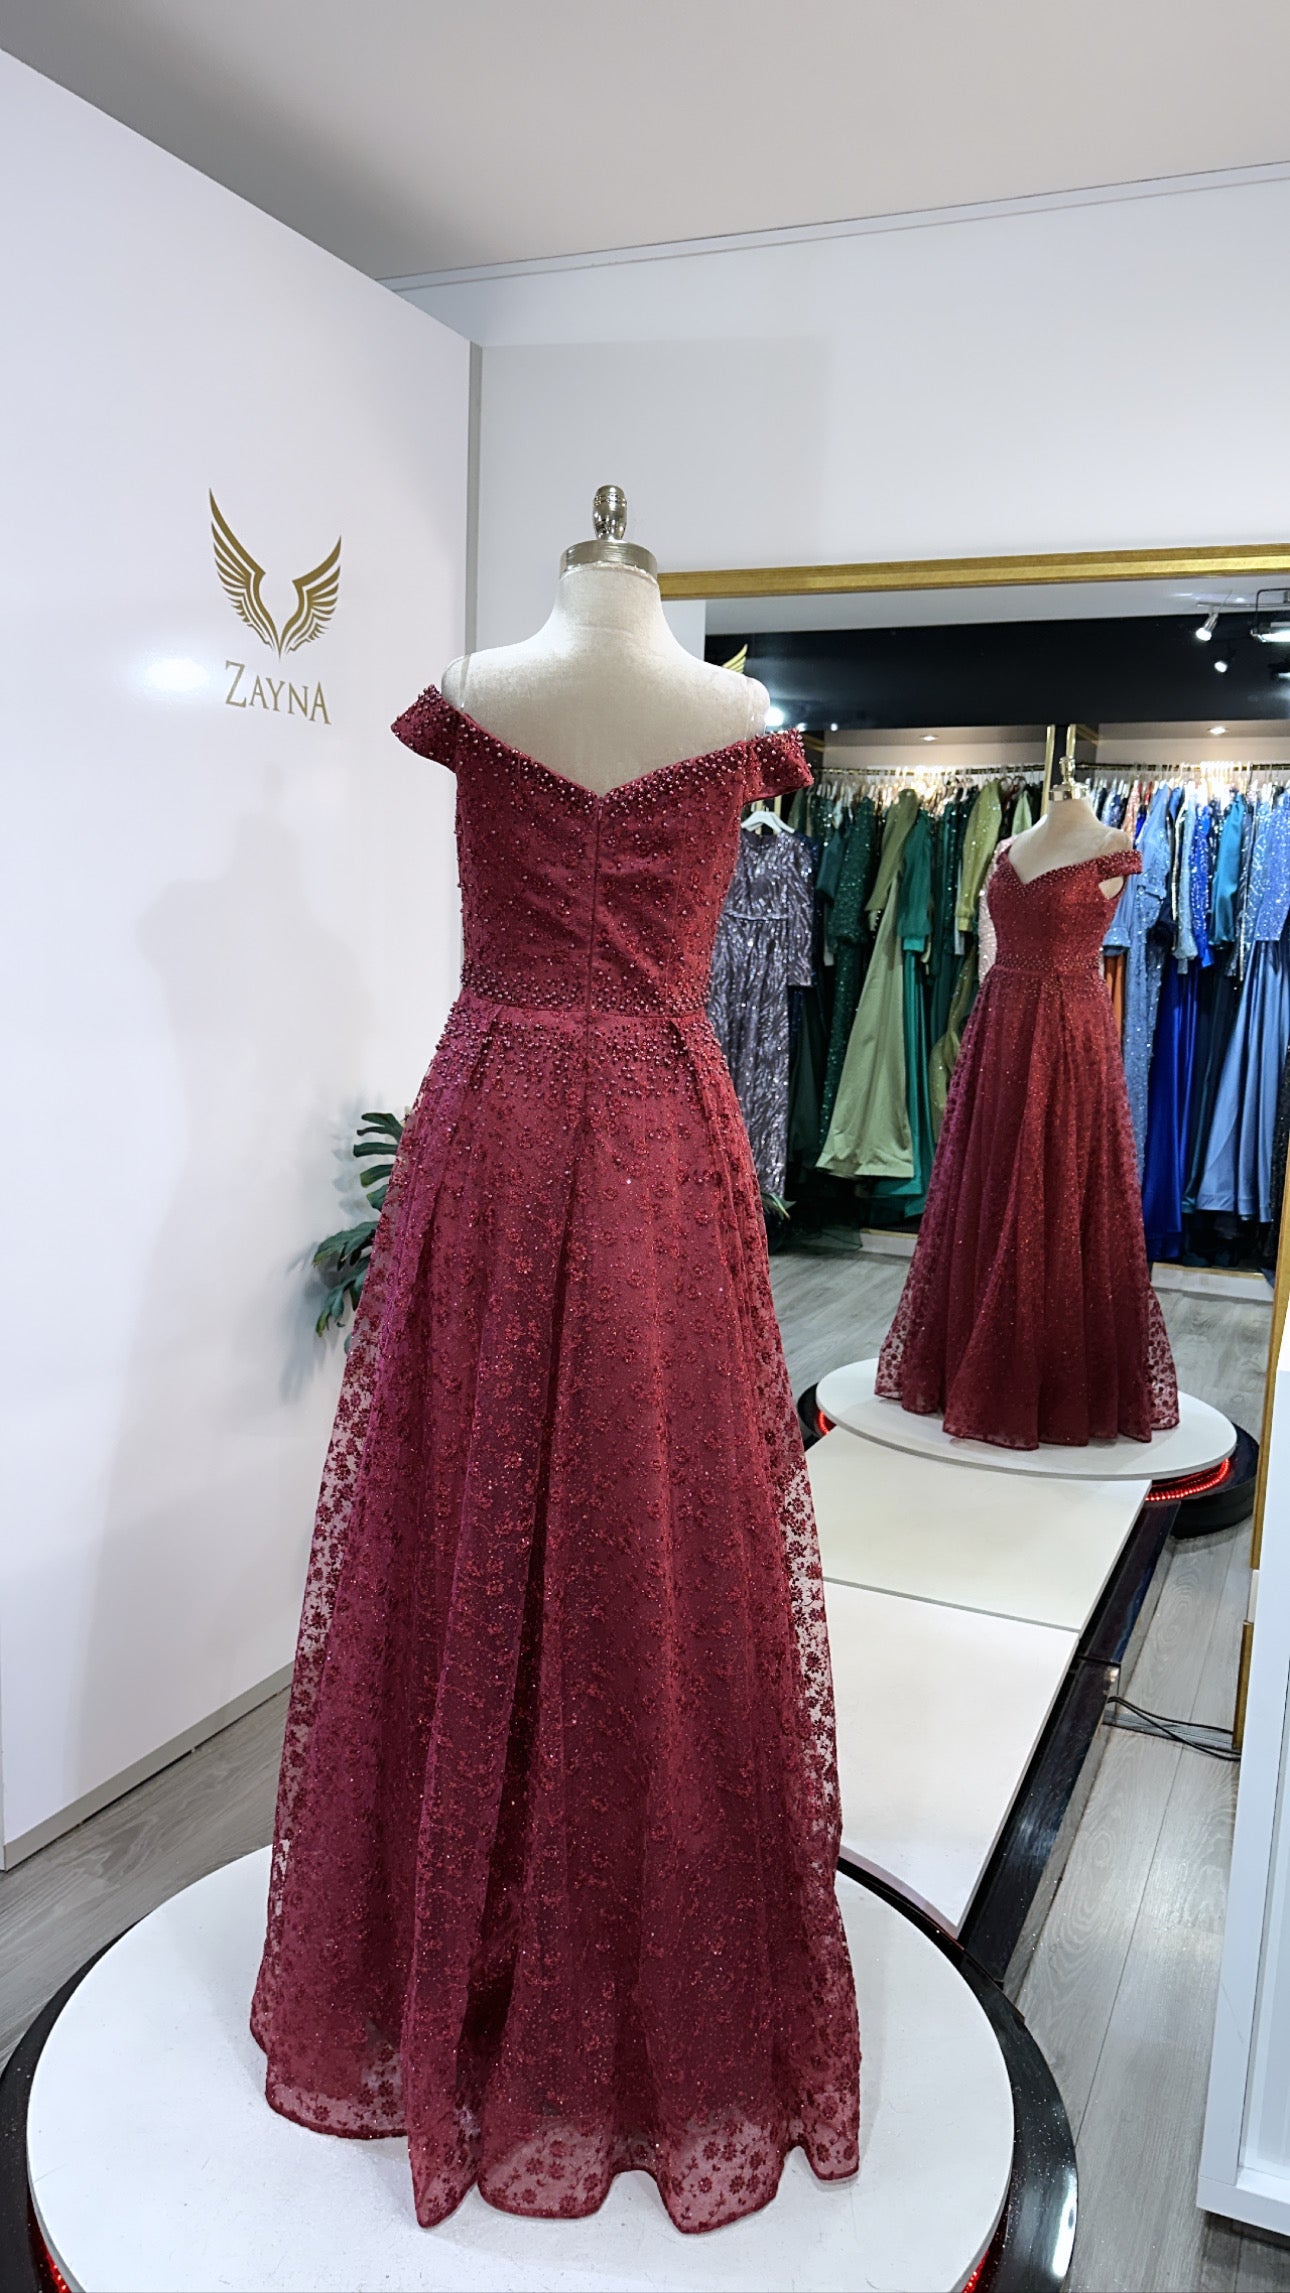 Elegant red dress